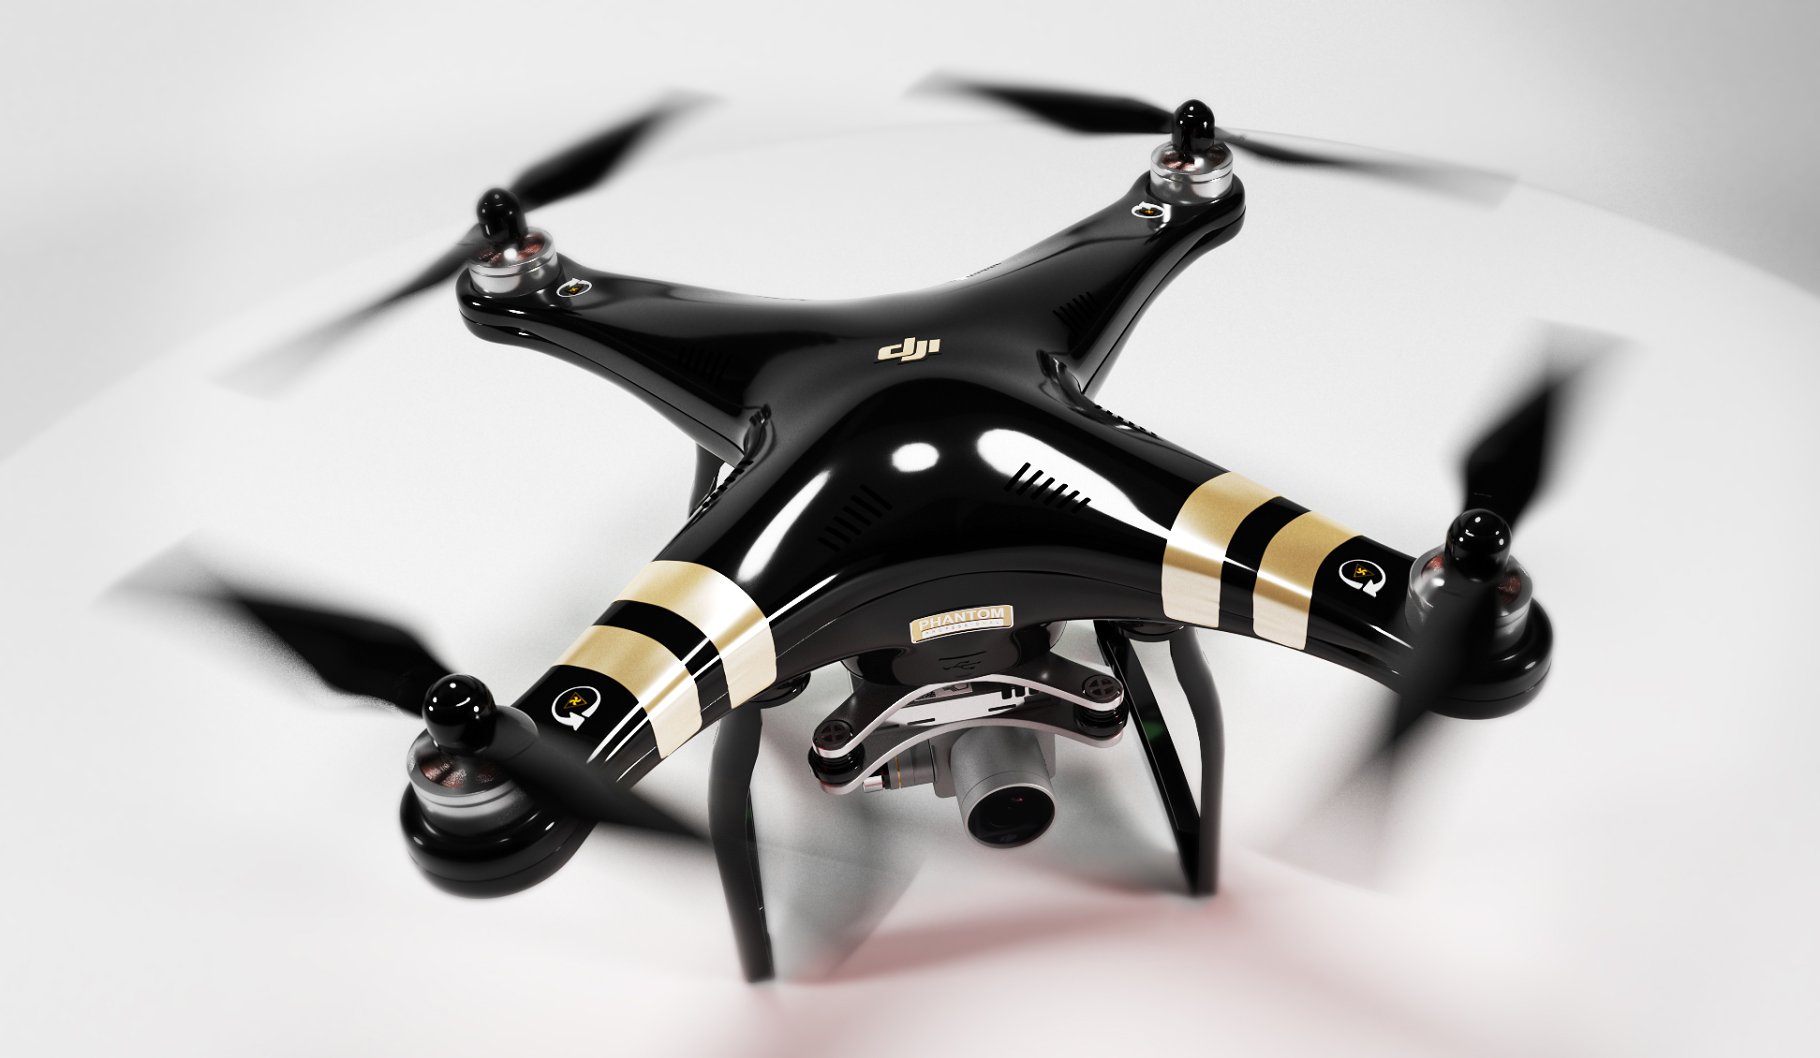 A unique rendering of a black DJI Phantom 3 drone